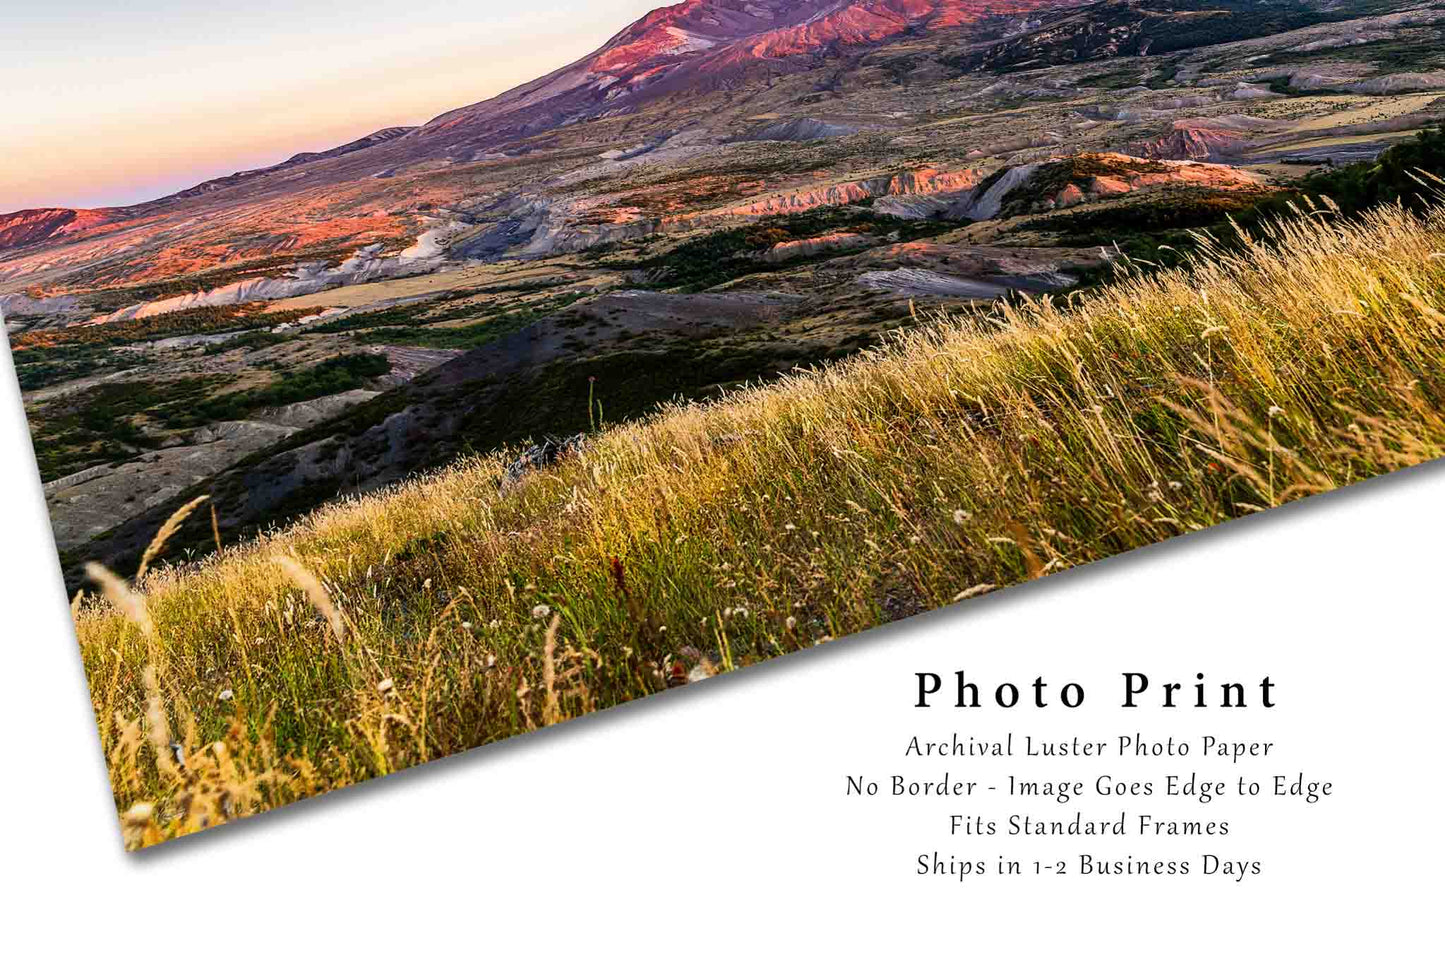 Mount St Helens Photography Print | Pacific Northwest Picture | Washington Wall Art | Cascade Range Photo | Nature Decor | Not Framed